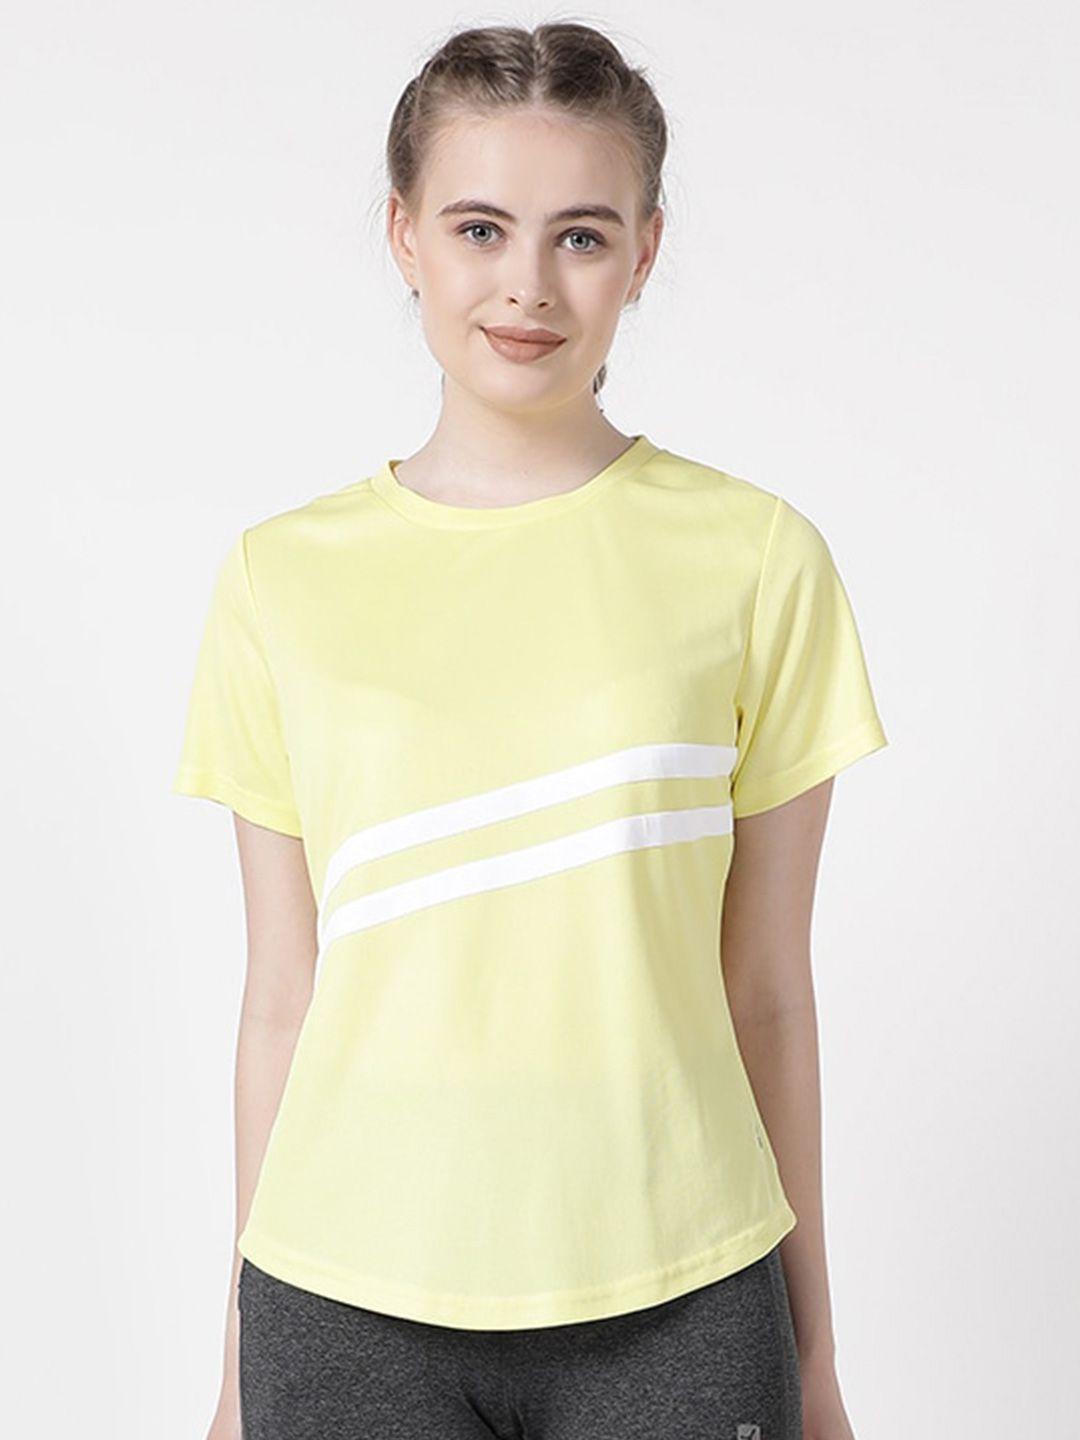 studioactiv women yellow extended sleeves t-shirt